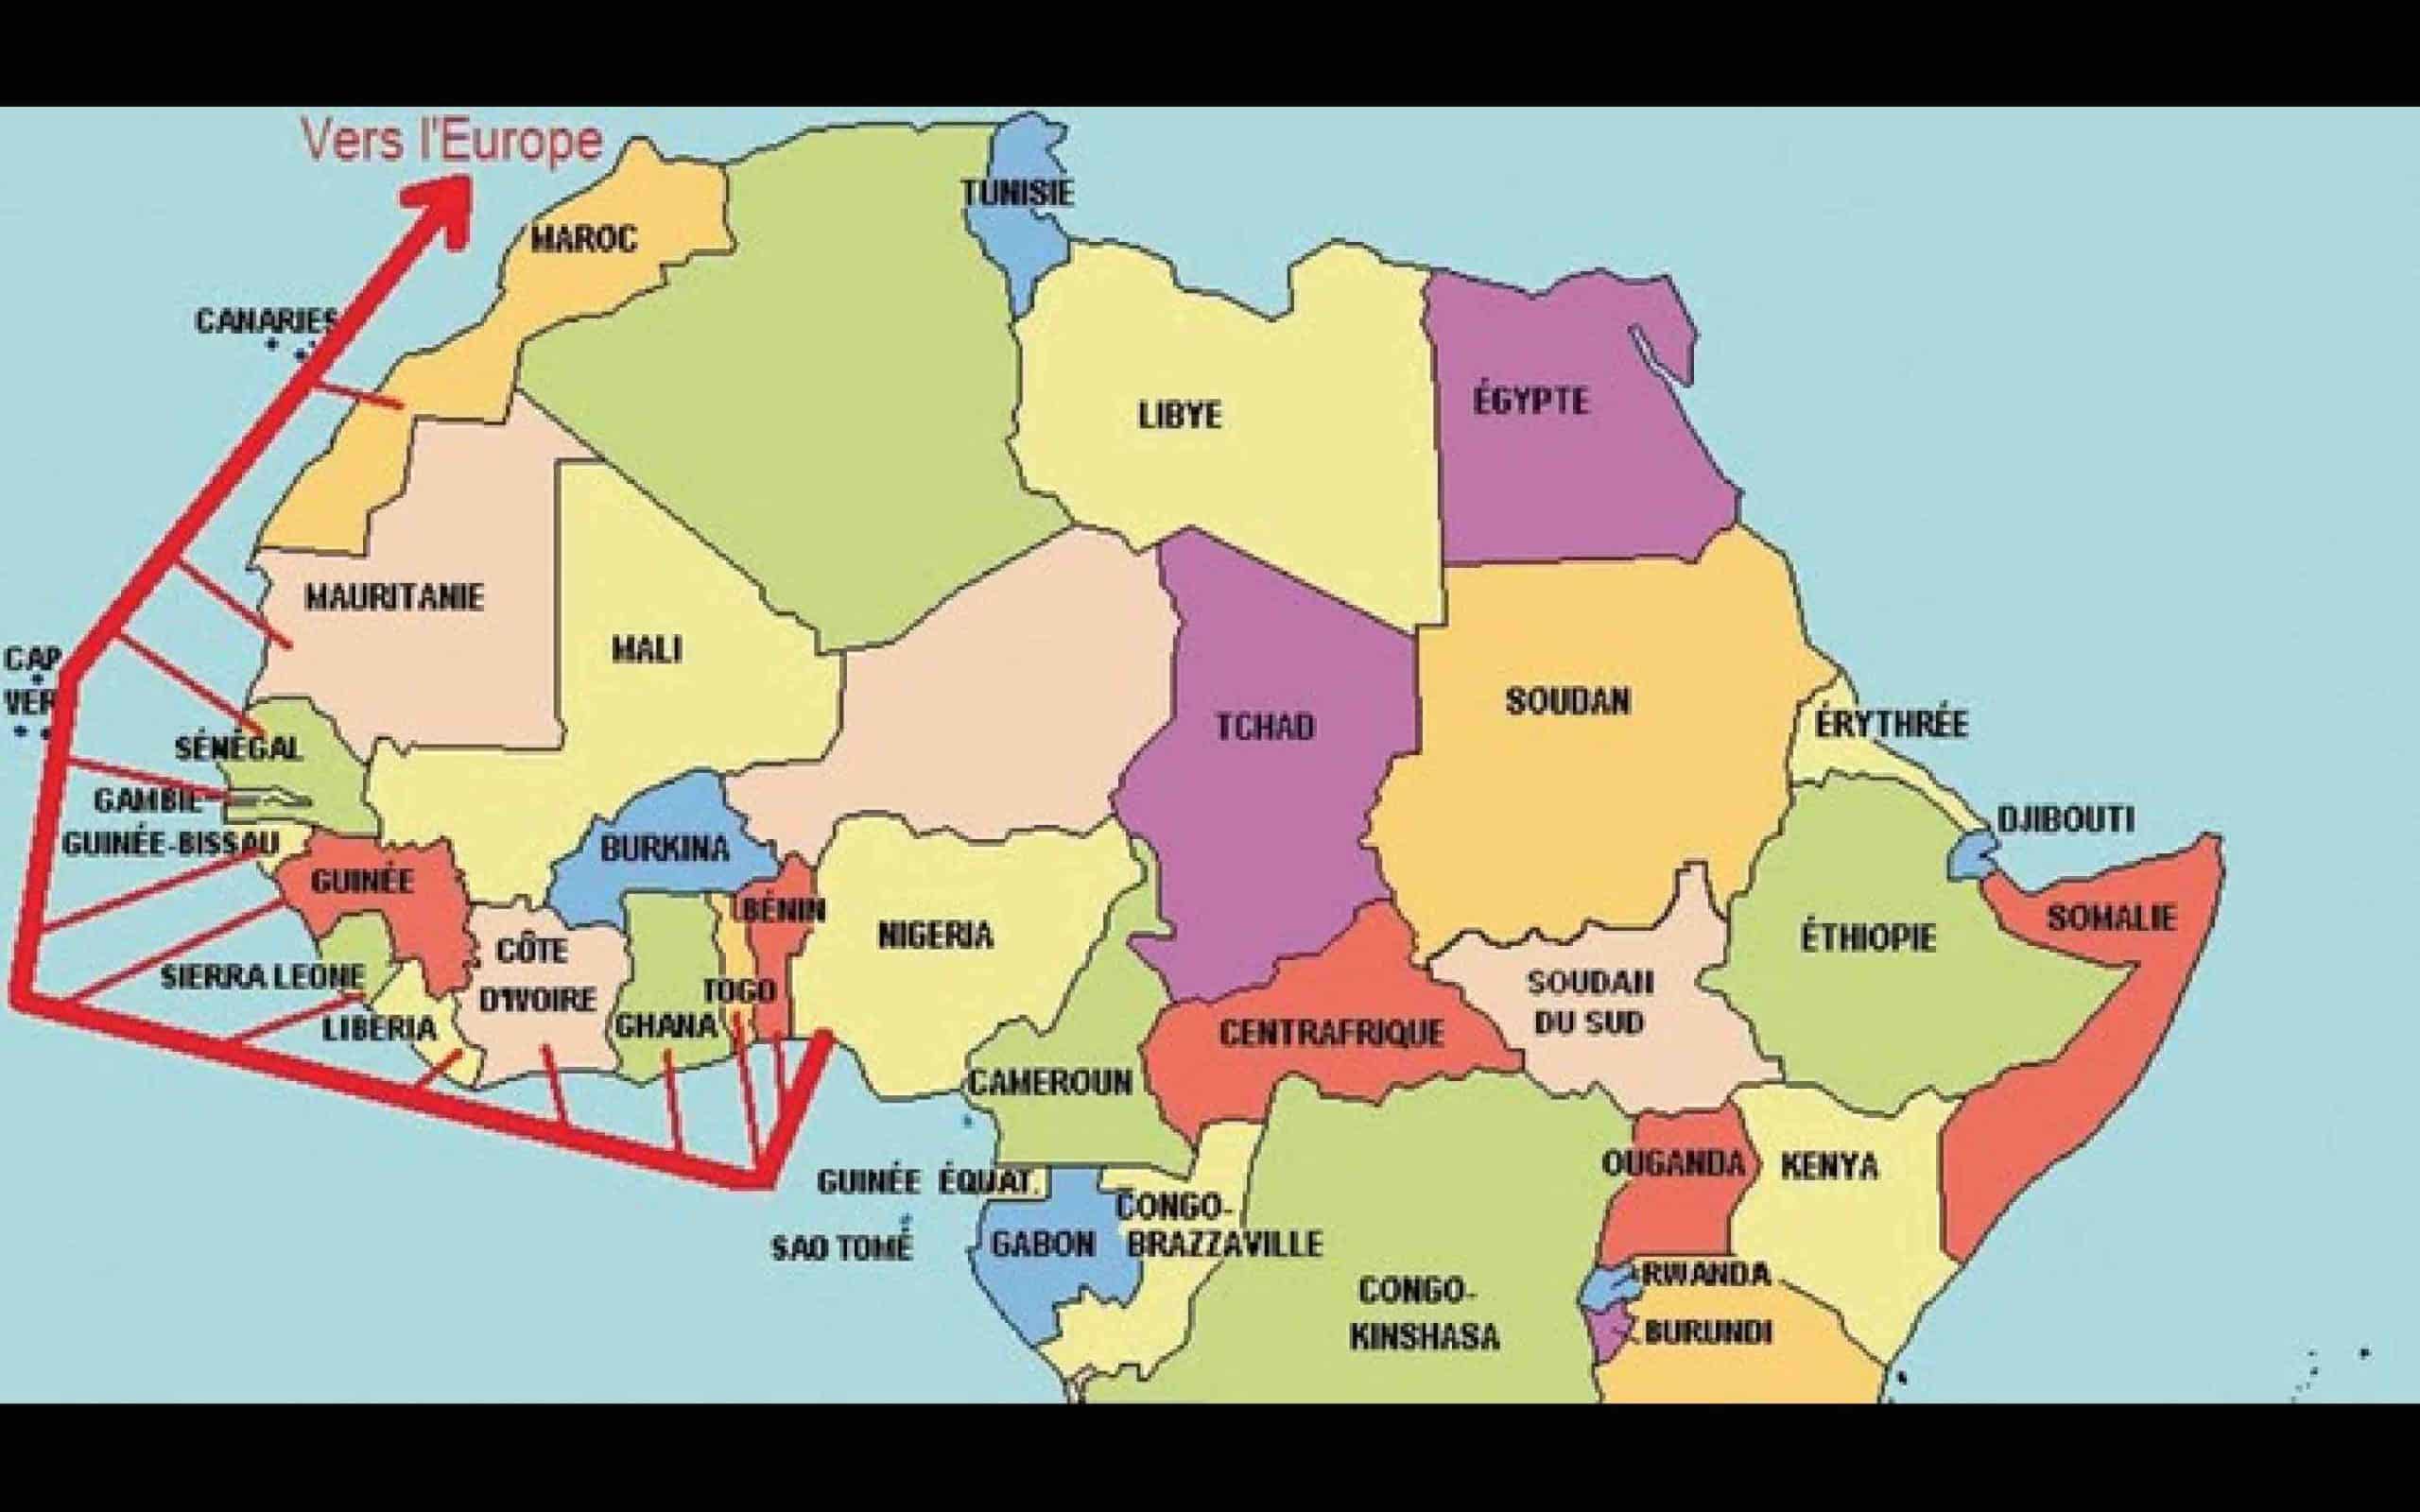 gas pipeline -Nigeria-Morocco